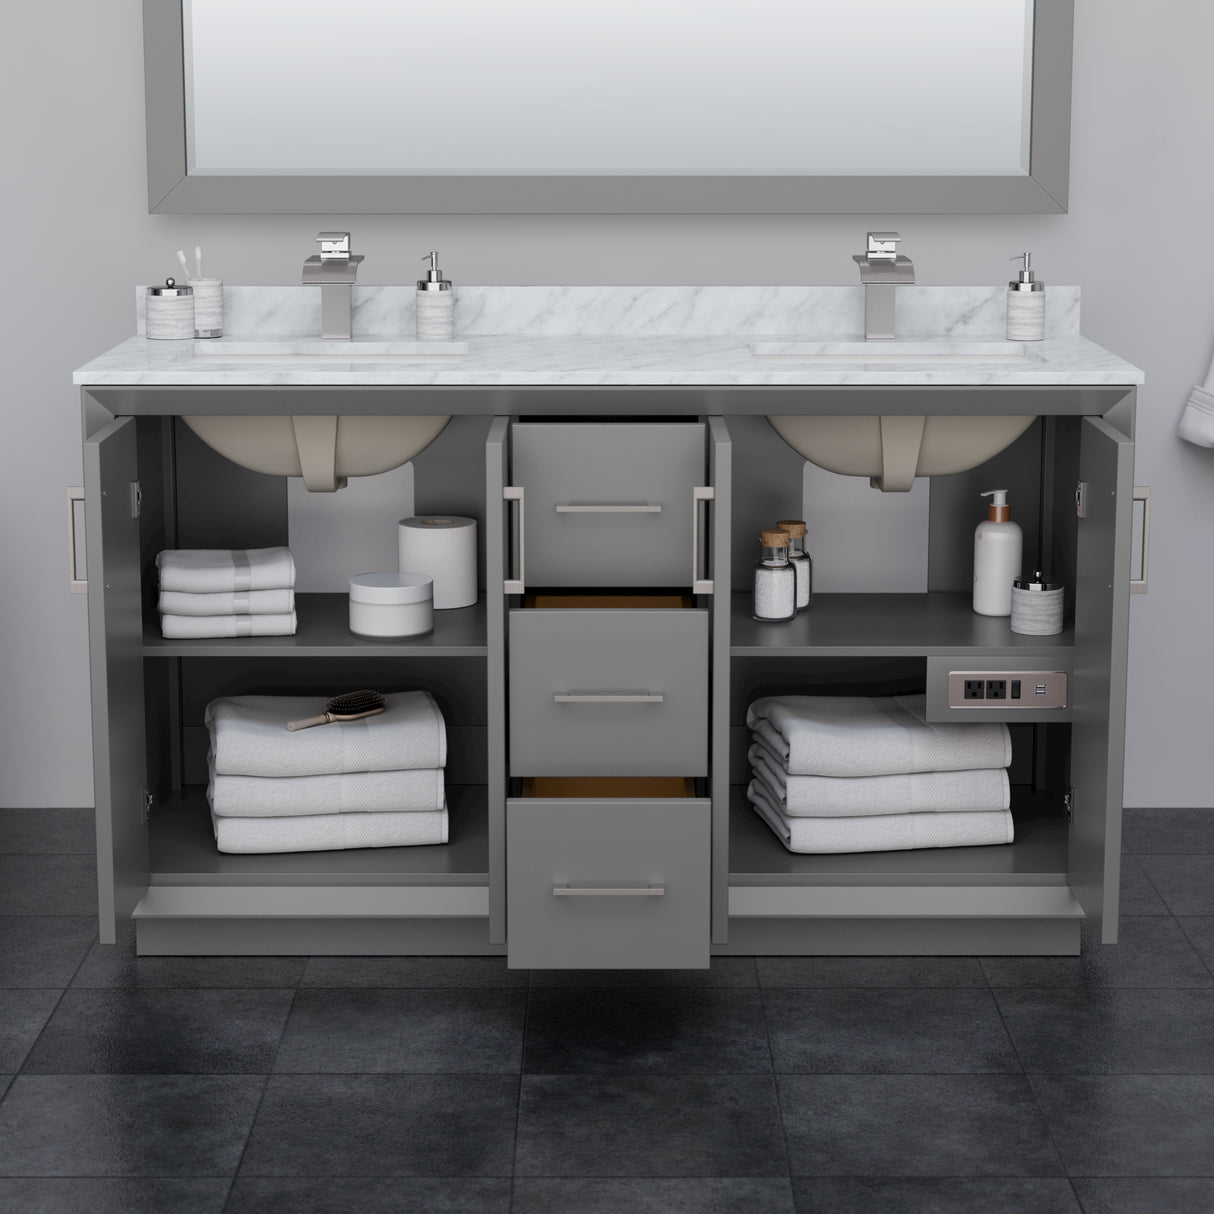 Strada 60 Inch Double Bathroom Vanity in Dark Gray No Countertop No Sink Brushed Nickel Trim